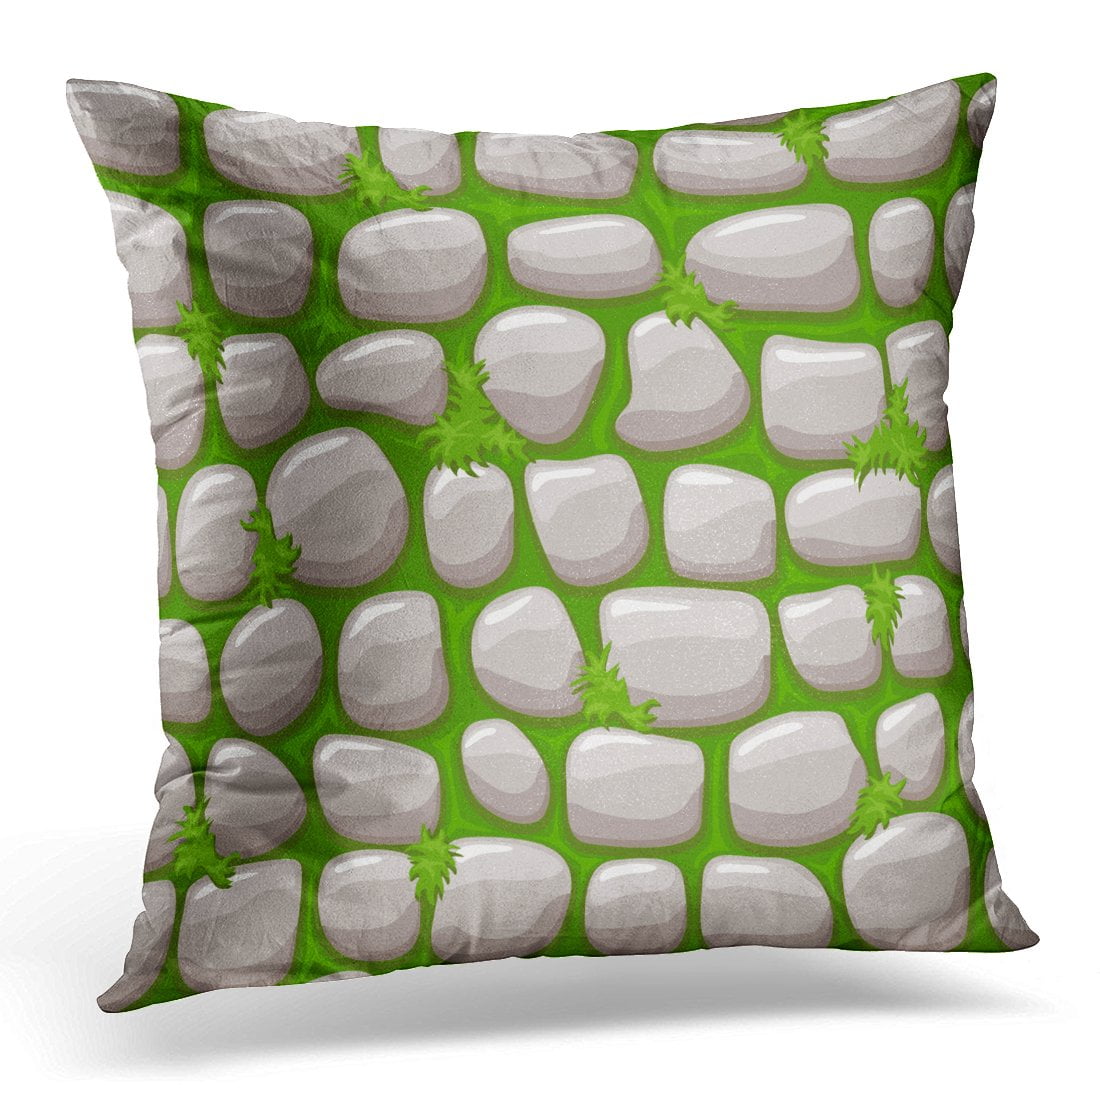 ECCOT Floor Rock Gray Old Stone on Grass Cartoon Cobblestone Wall  Pillowcase Pillow Cover Cushion Case 18x18 inch 